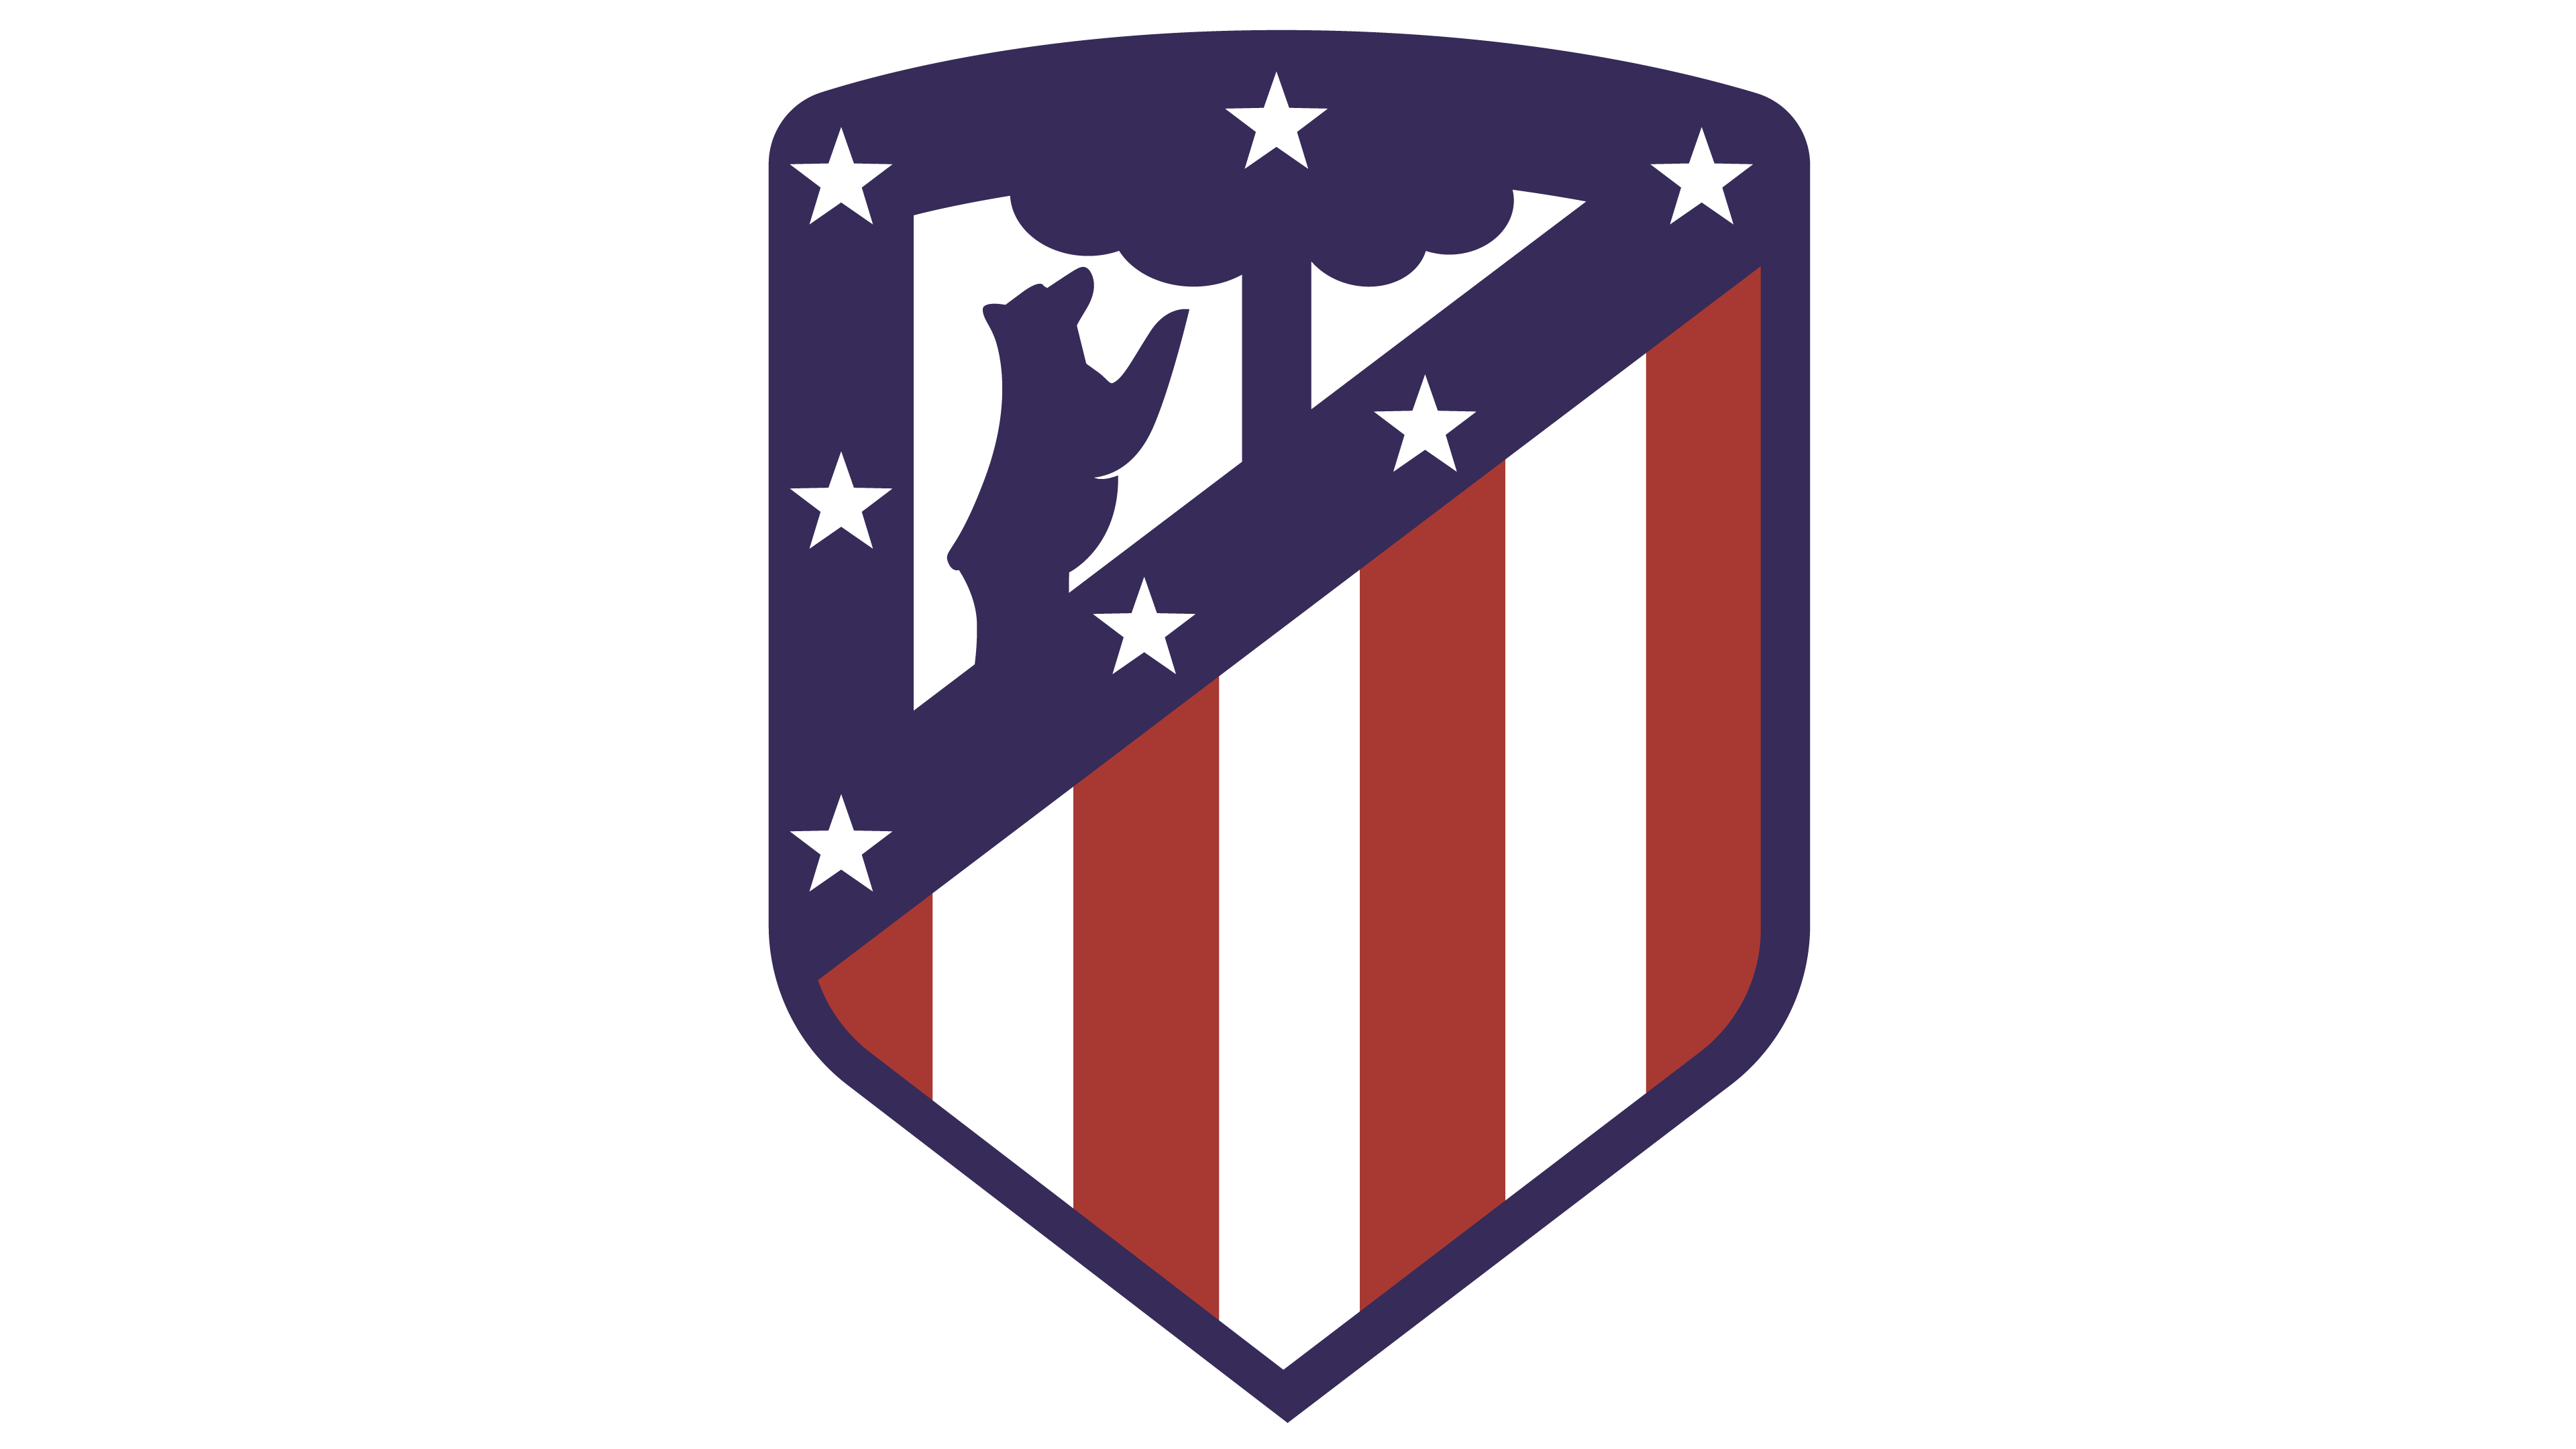 Madrid Logo - Atletico Madrid Logo - Interesting History of the Team Name and emblem